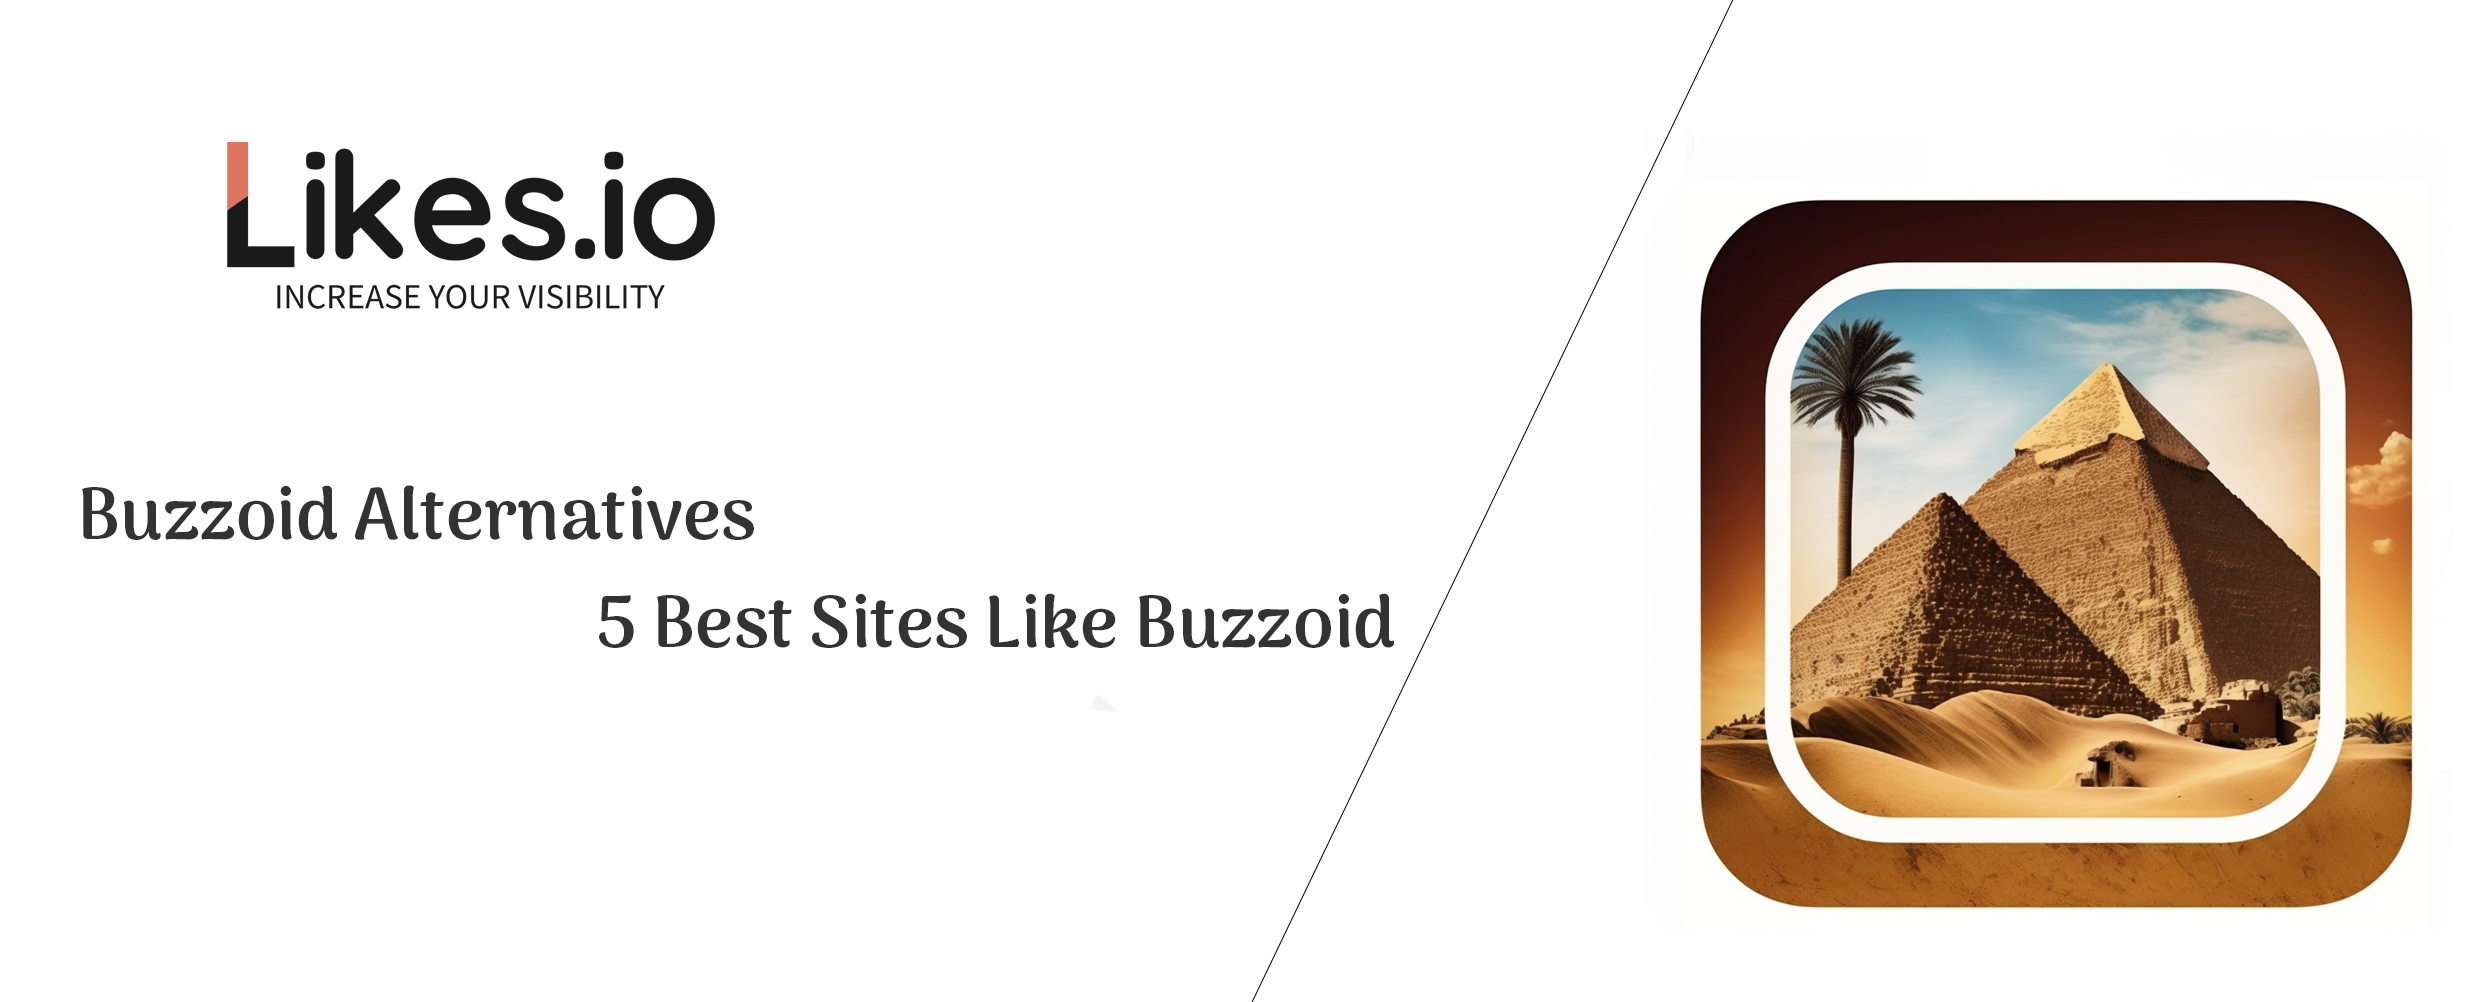 Buzzoid Alternatives: 6 Best Sites Like Buzzoid